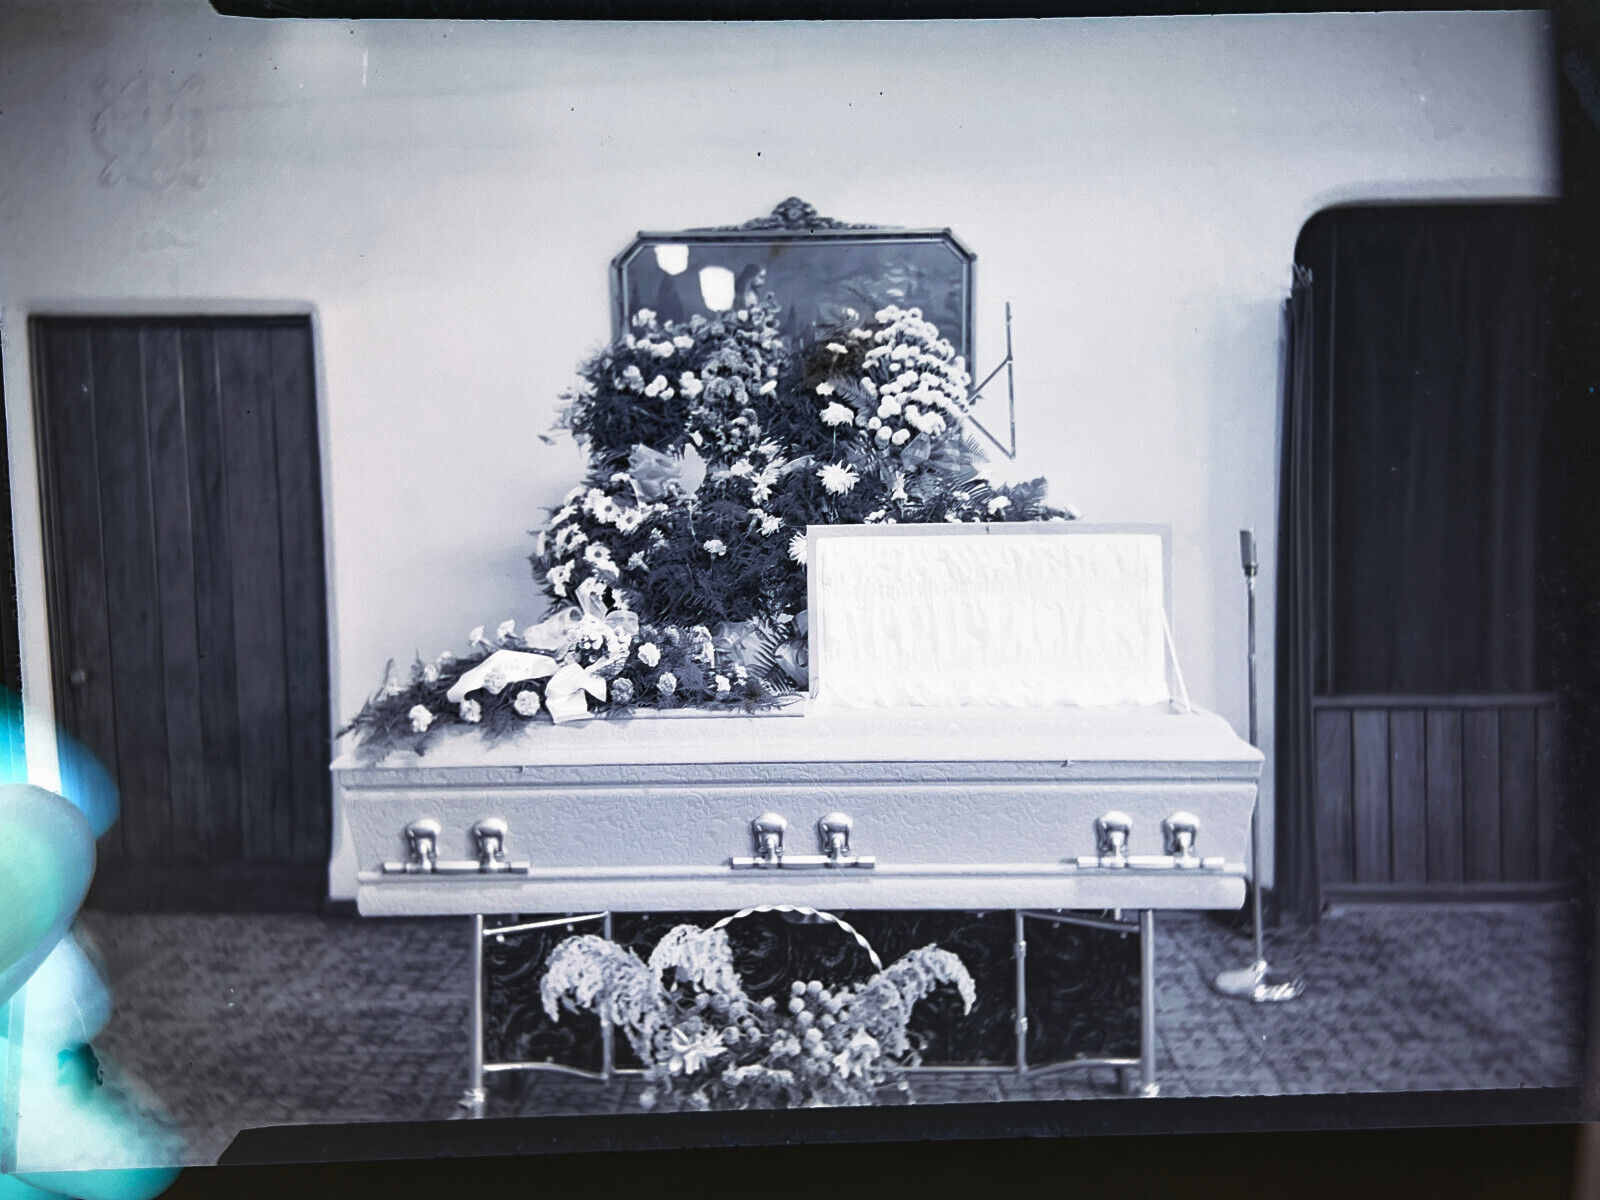 Lot (x3) post Mortem Funeral Mortuary casket flowers Pratt kansas photo negative